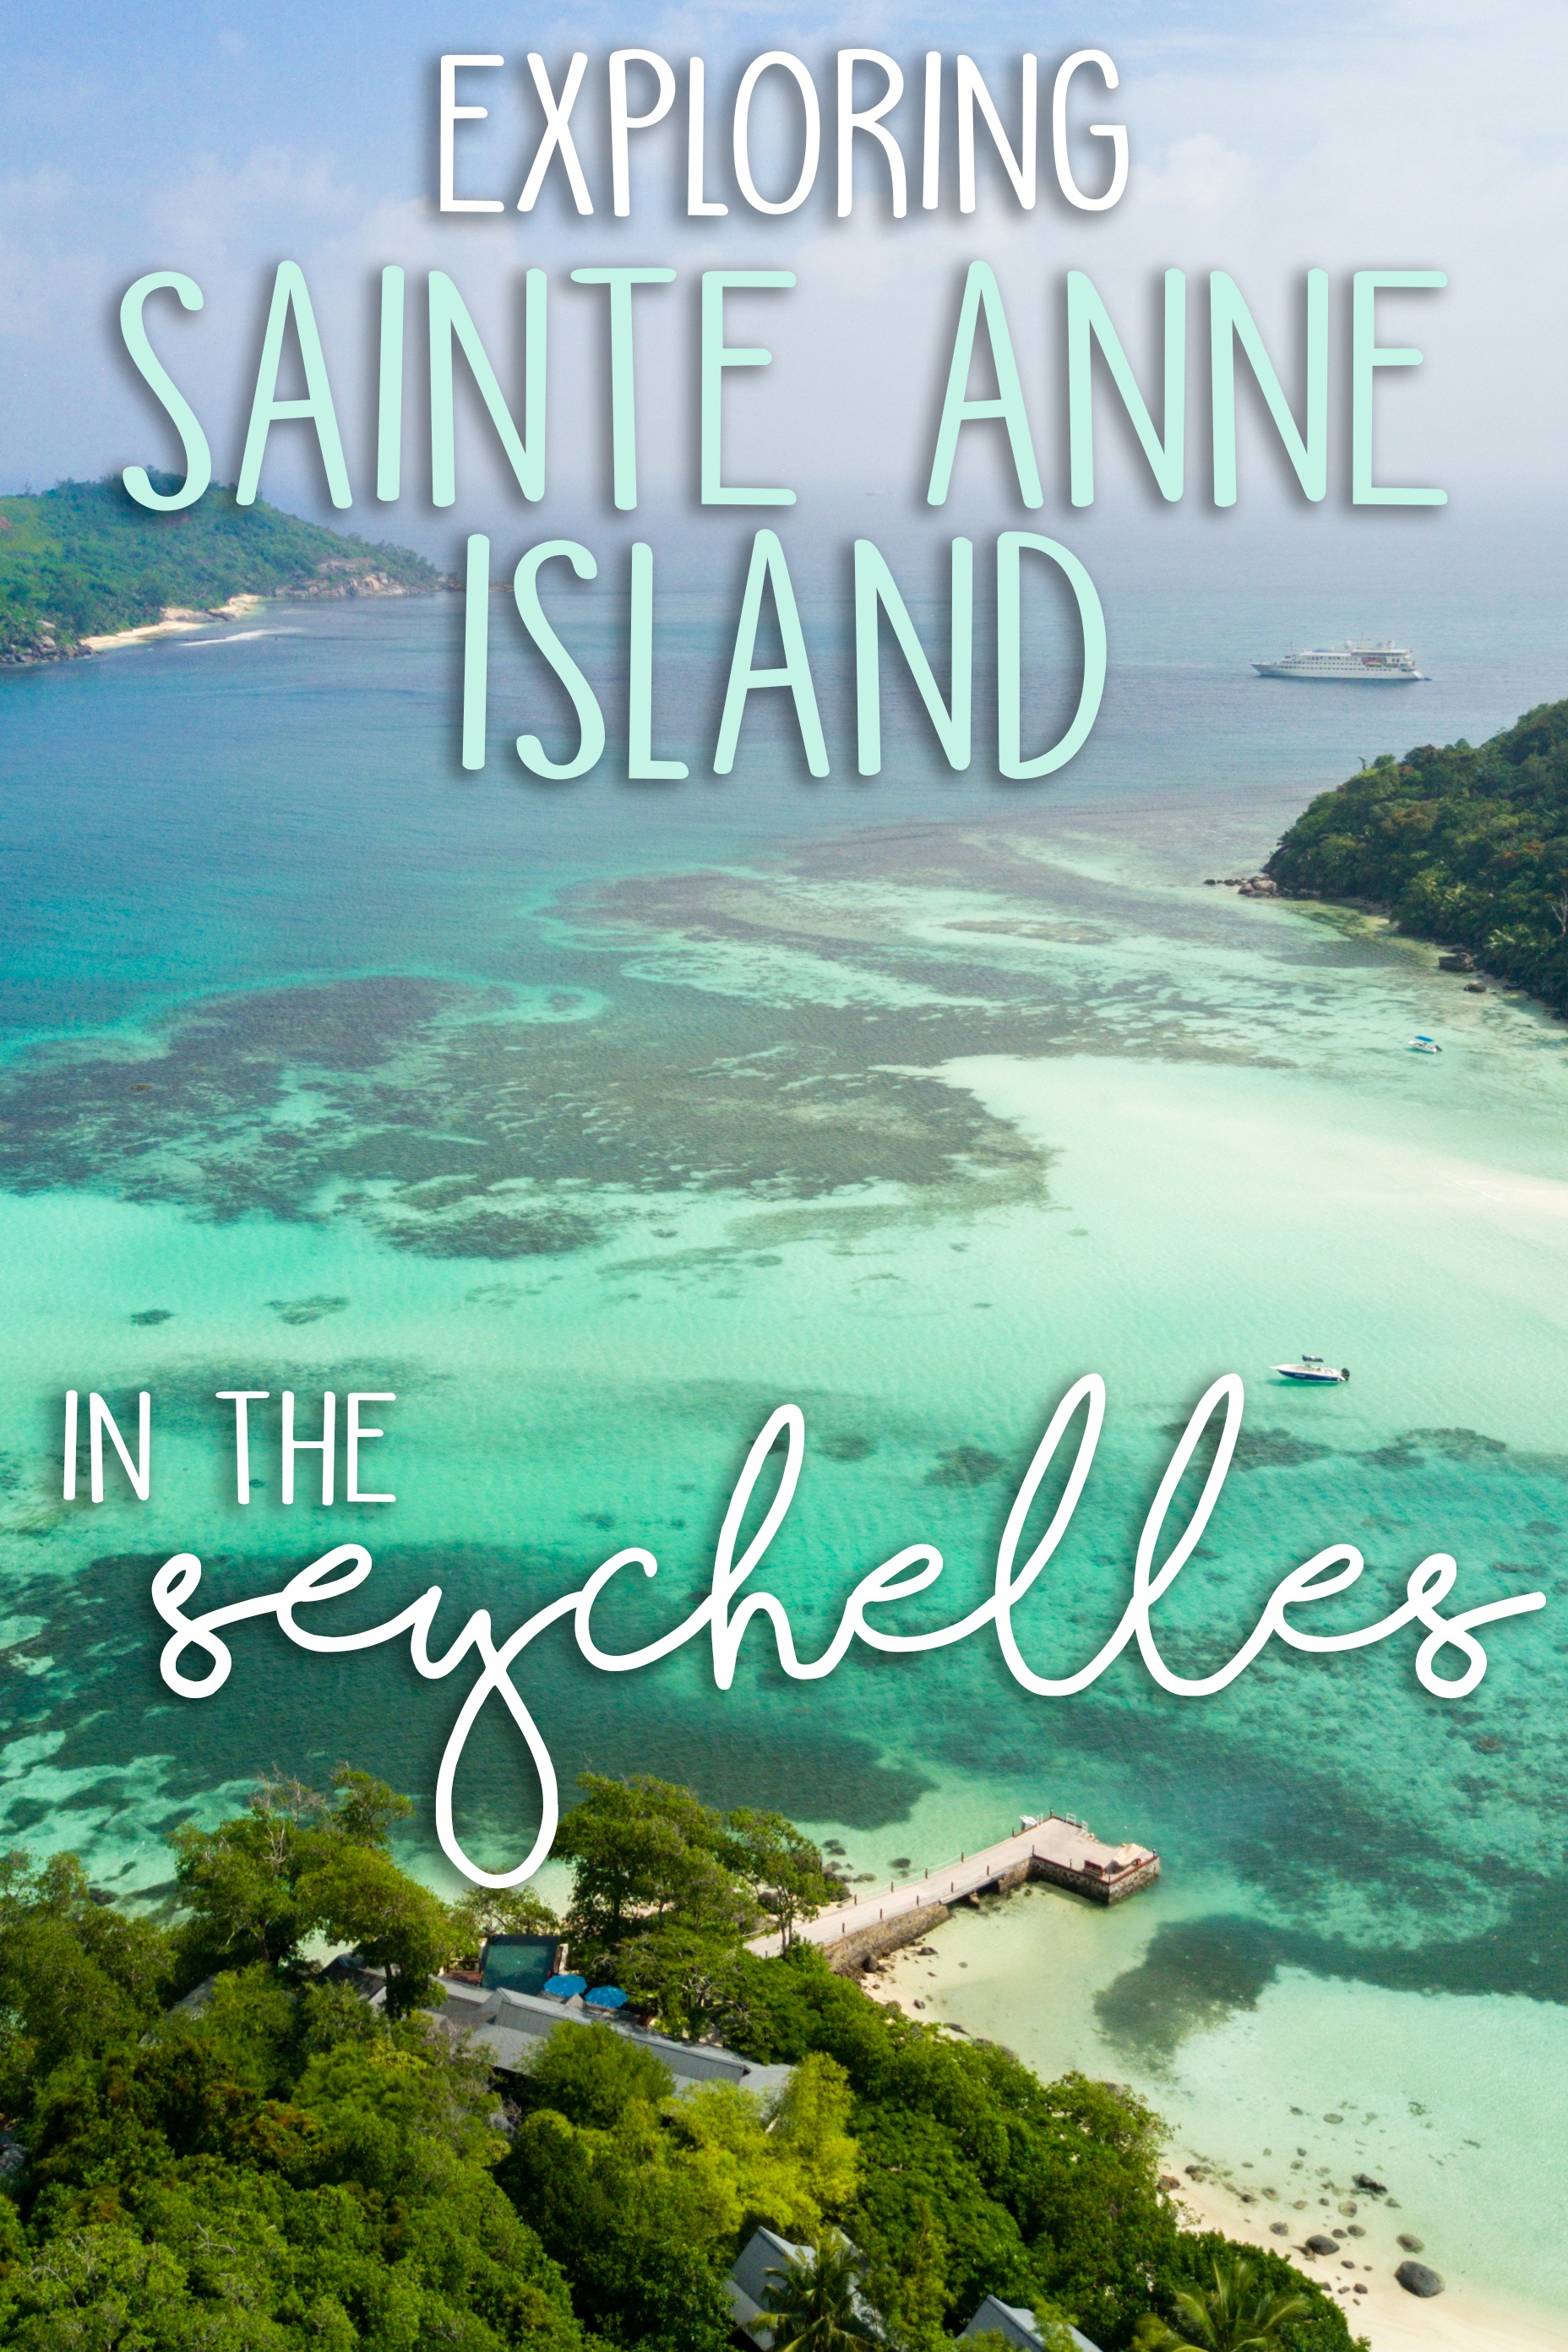 Exploring Sainte Anne Island in the Seychelles